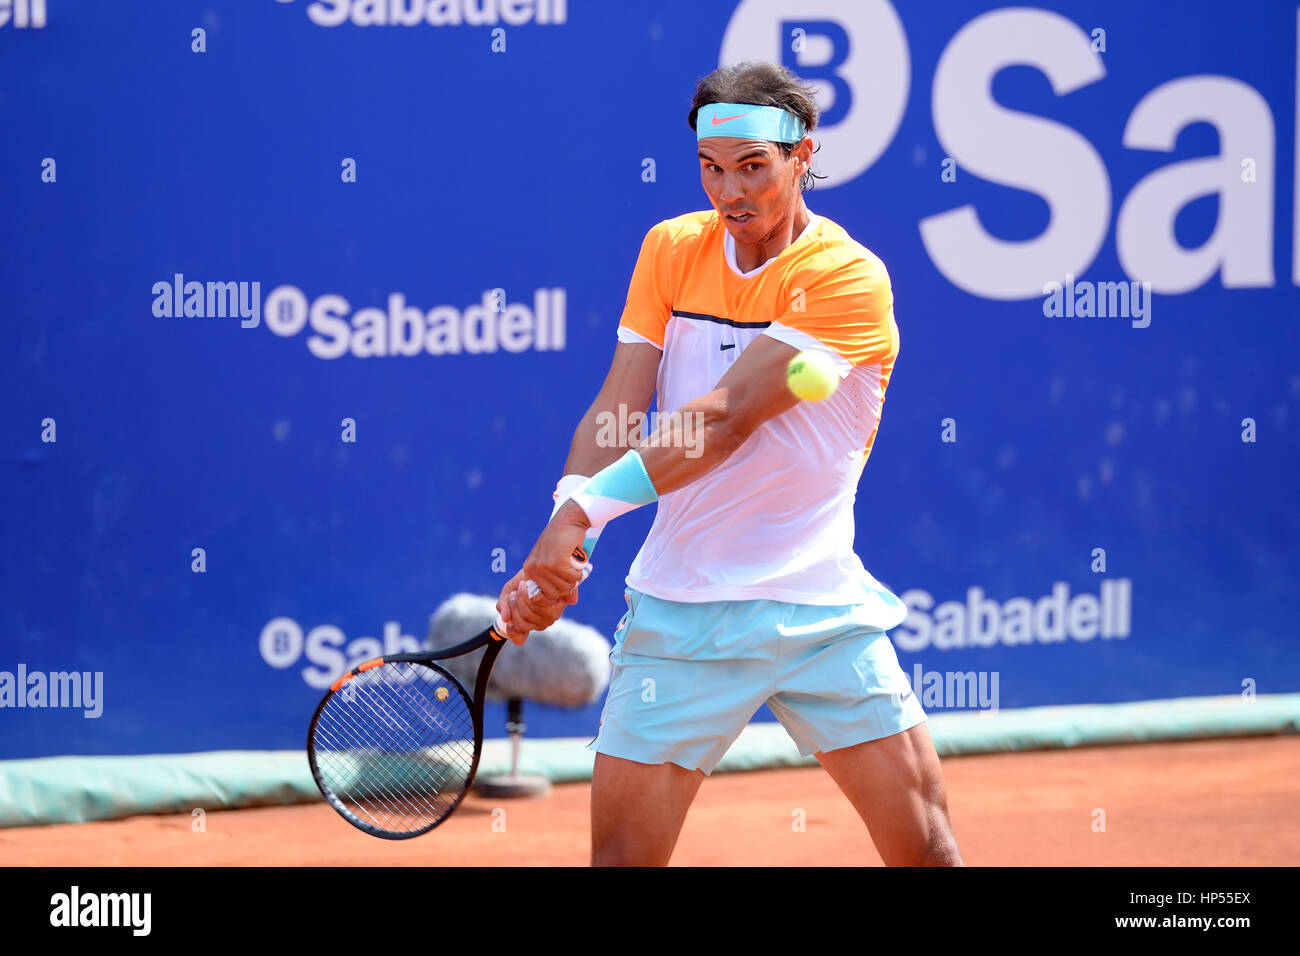 BARCELONA - APR 22: Rafa Nadal (Spanish tennis player) plays at the ATP Barcelona Open Banc Sabadell Conde de Godo tournament. Stock Photo